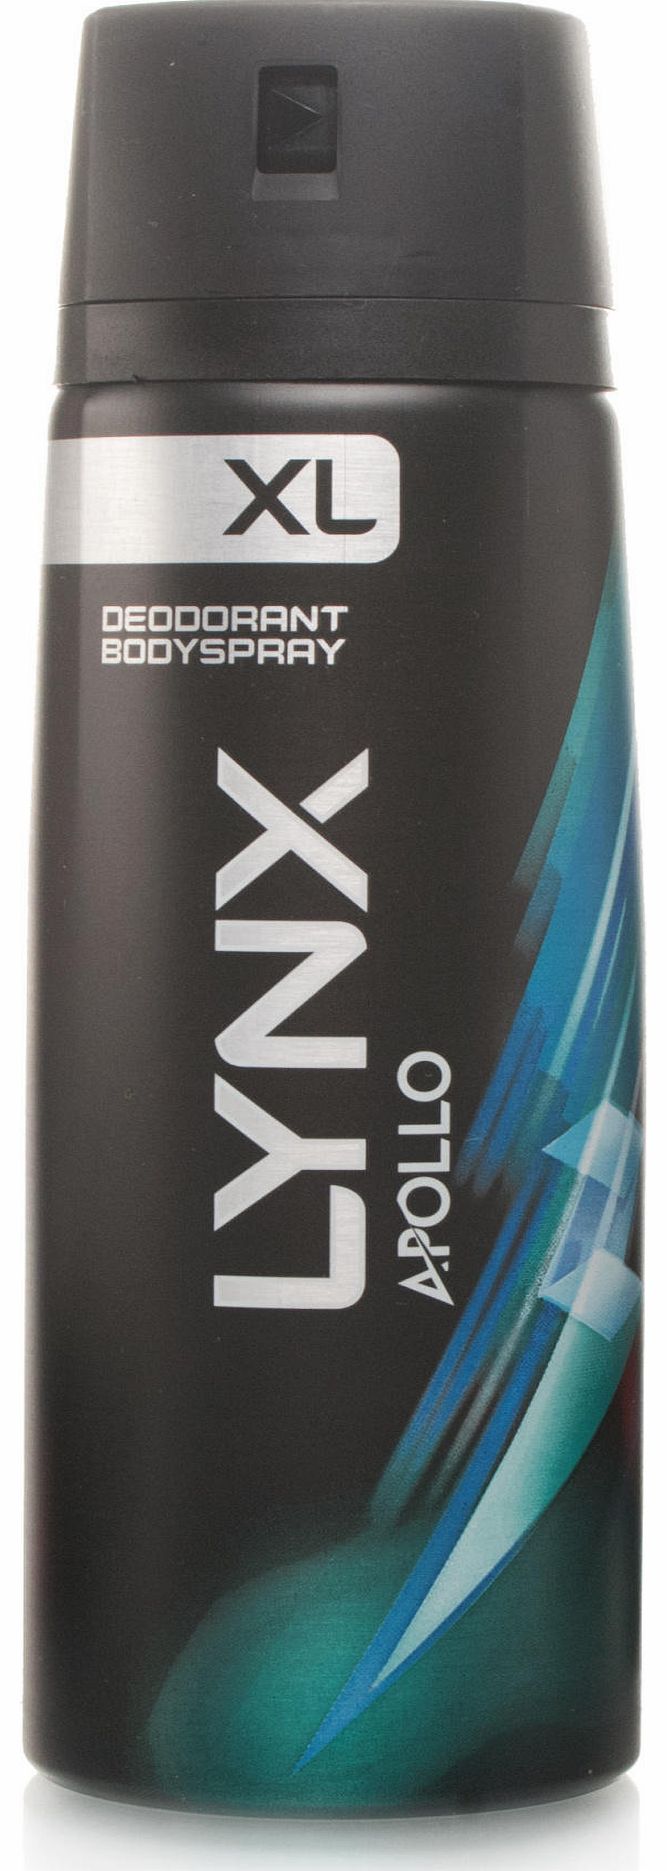 Lynx Apollo XL Deodorant Bodyspray